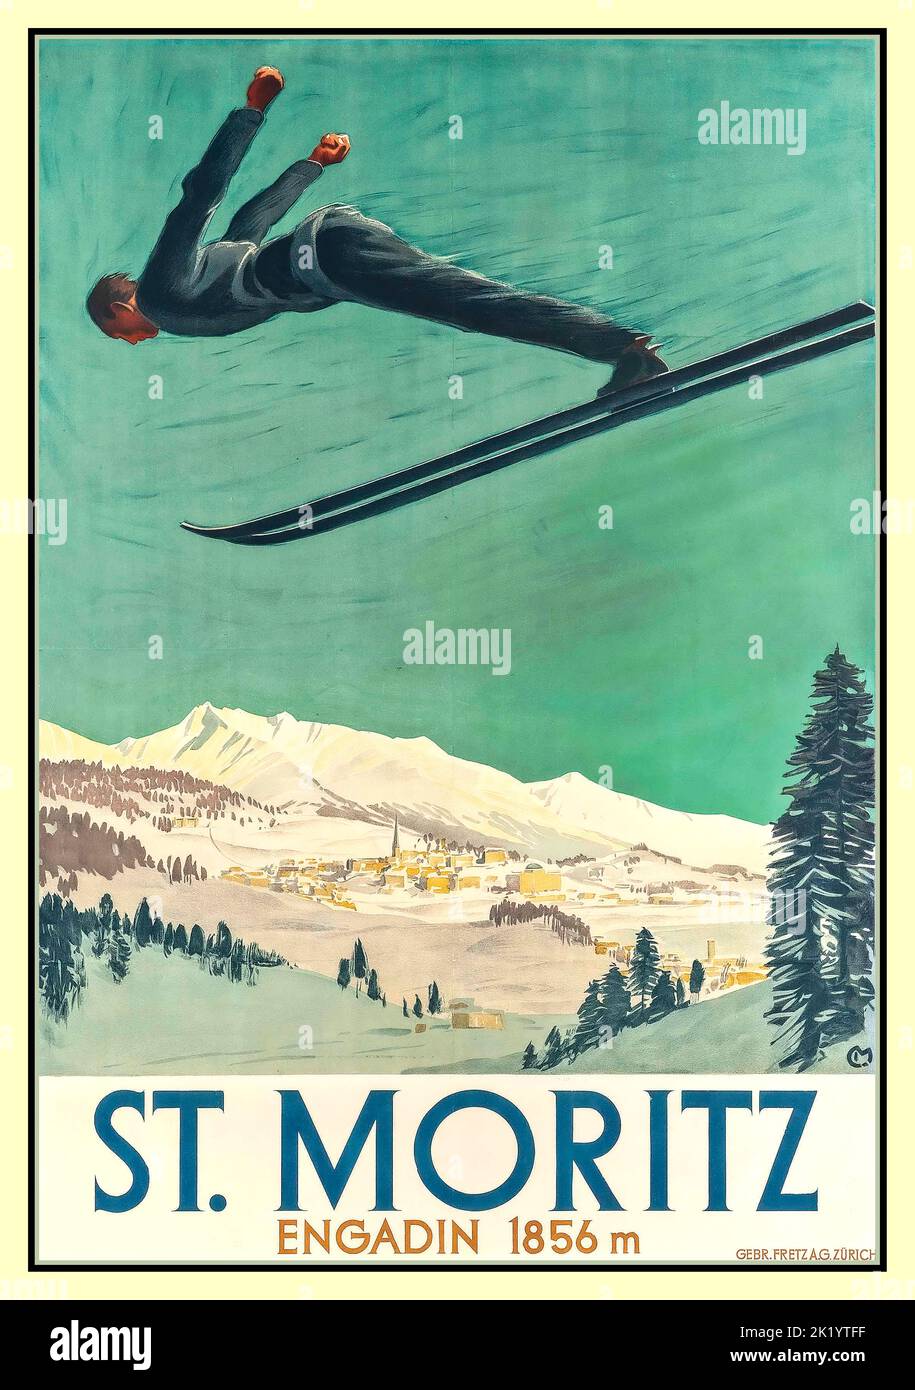 ST. MORITZ SKI JUMP VINTAGE 1900s winter sports ski jump Poster by Carl Moos (1878-1959) St Moritz lithograph, Engadine Valley at 1856M Switzerland Stock Photo